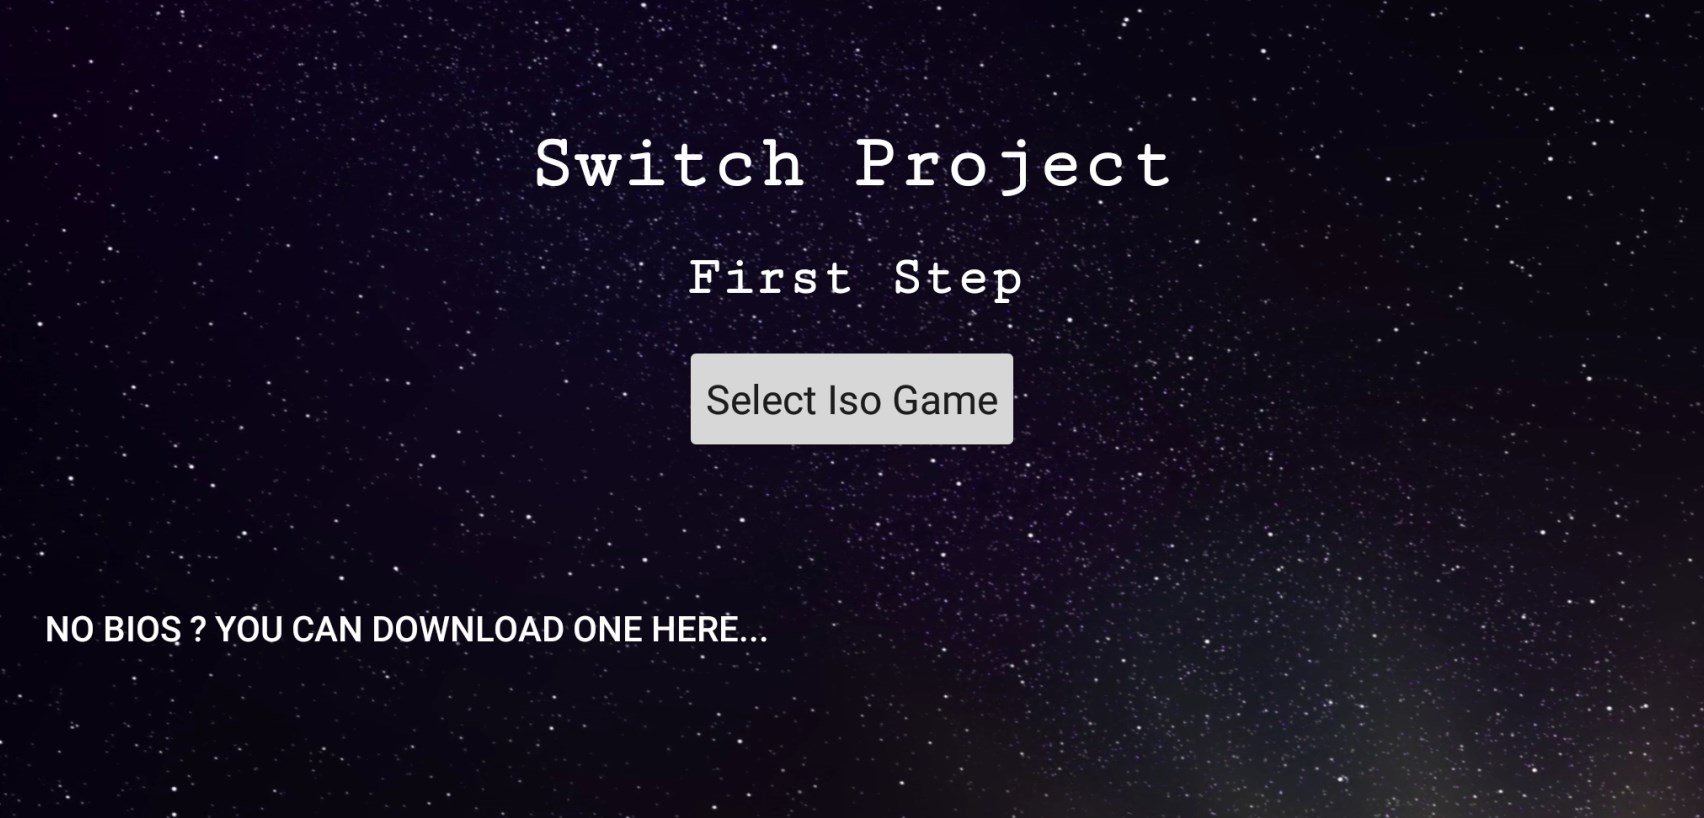 switch emulator mac